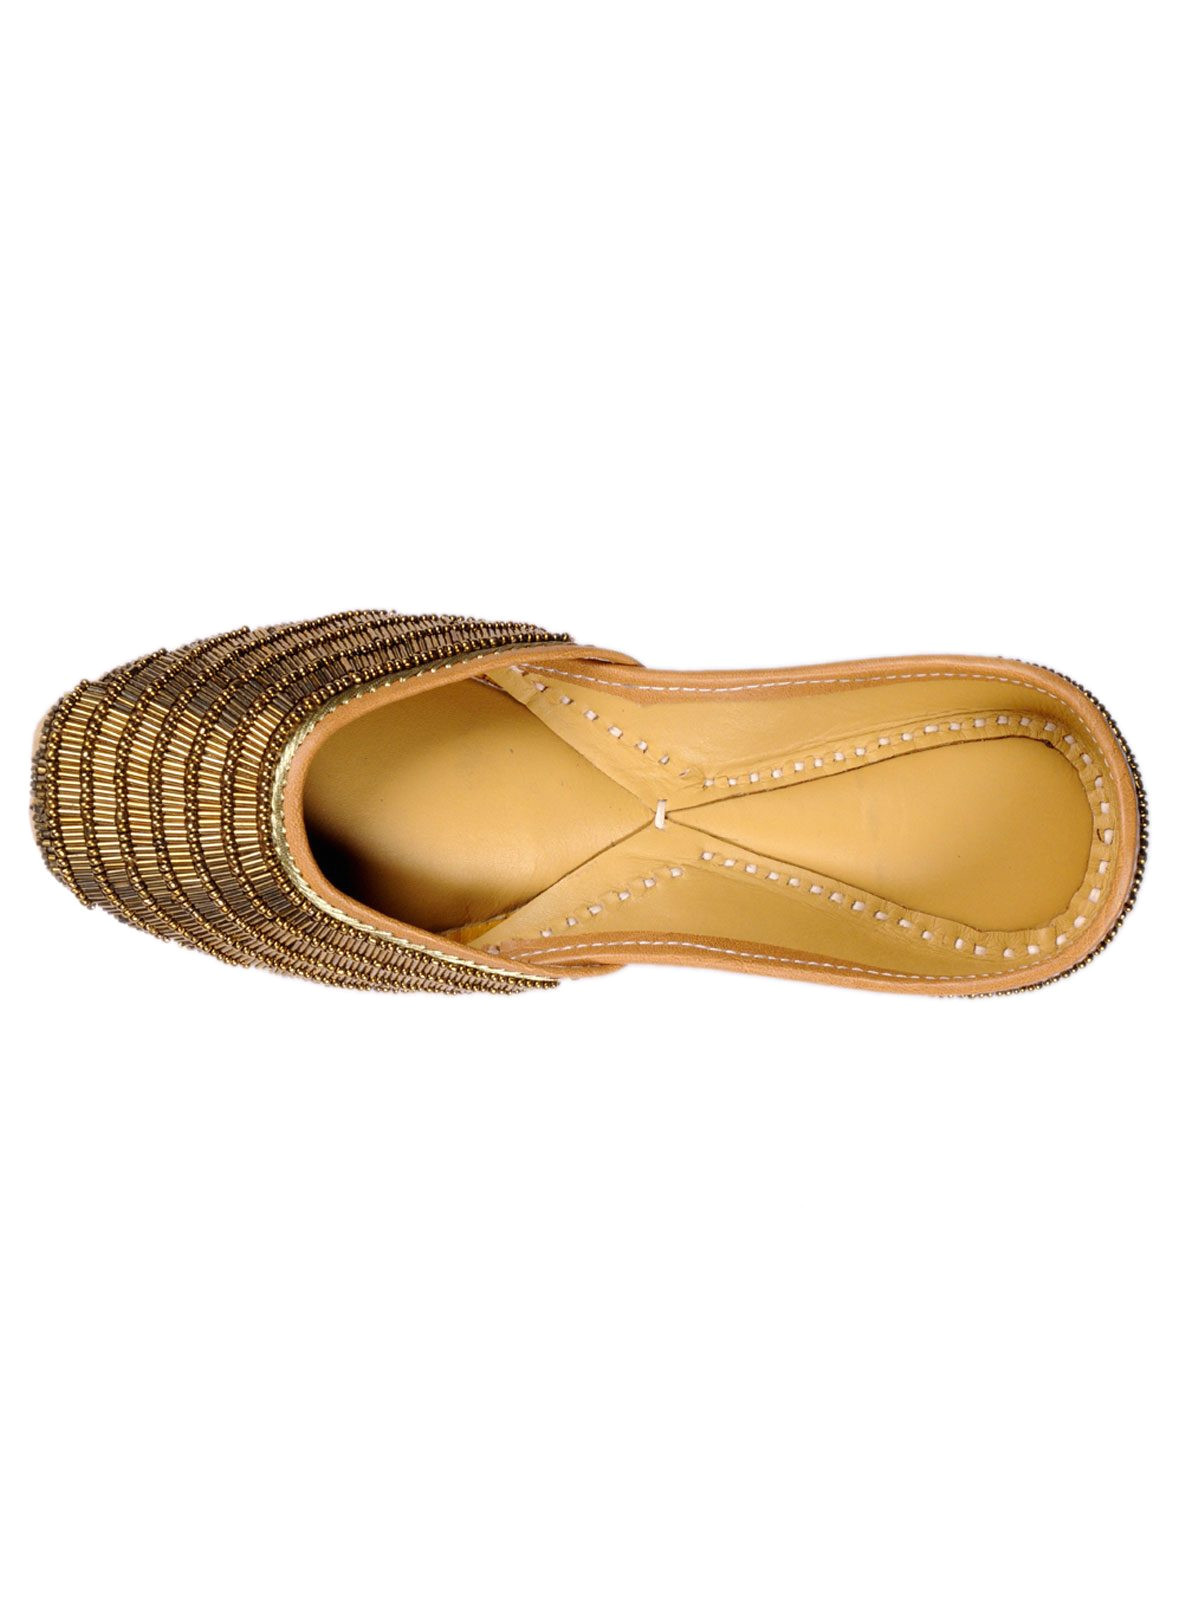 formal footwear for ladies gold gold mine juttis